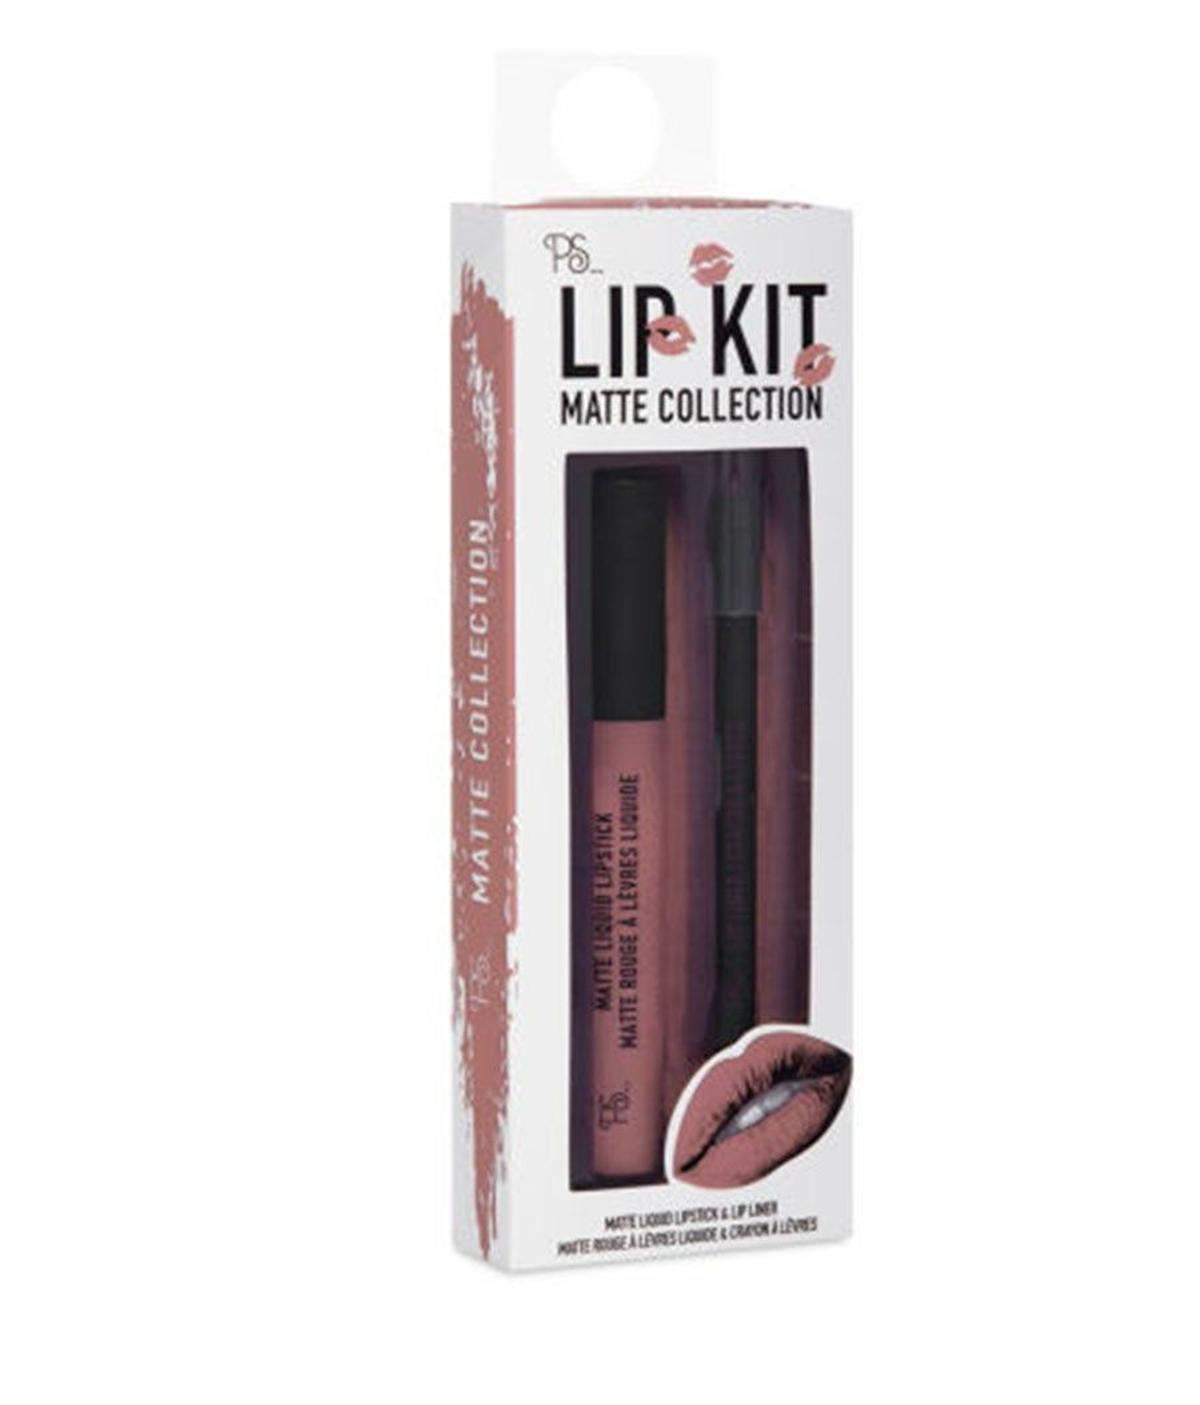 Primark clona los 'lip kits' de Kylie Jenner